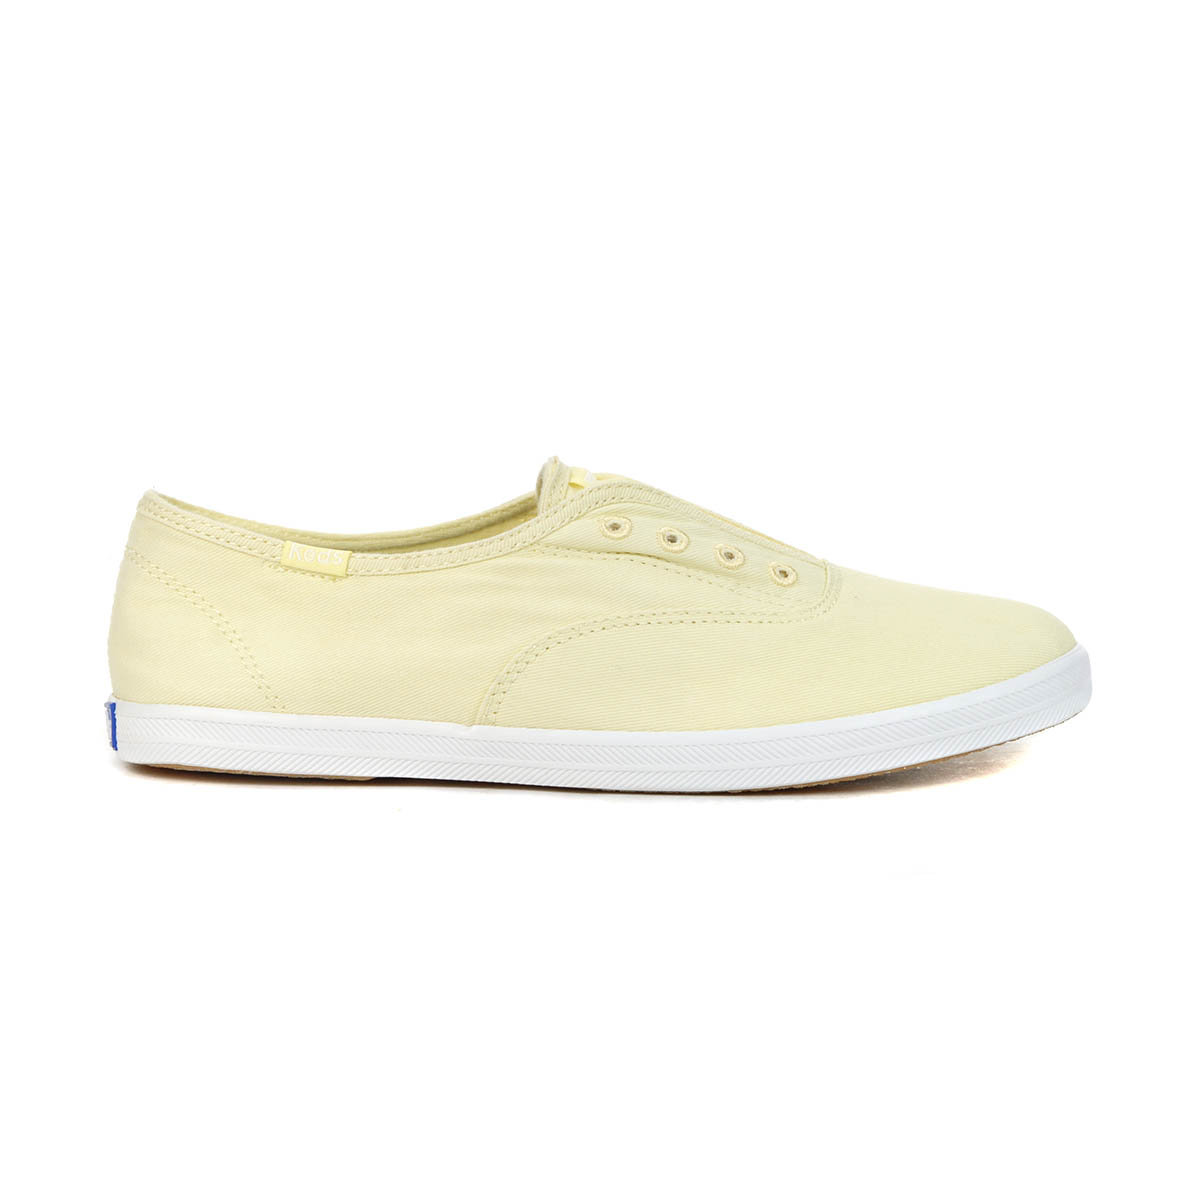 Keds Chillax Light Yellow Twill Slip-On Sneakers WF65900